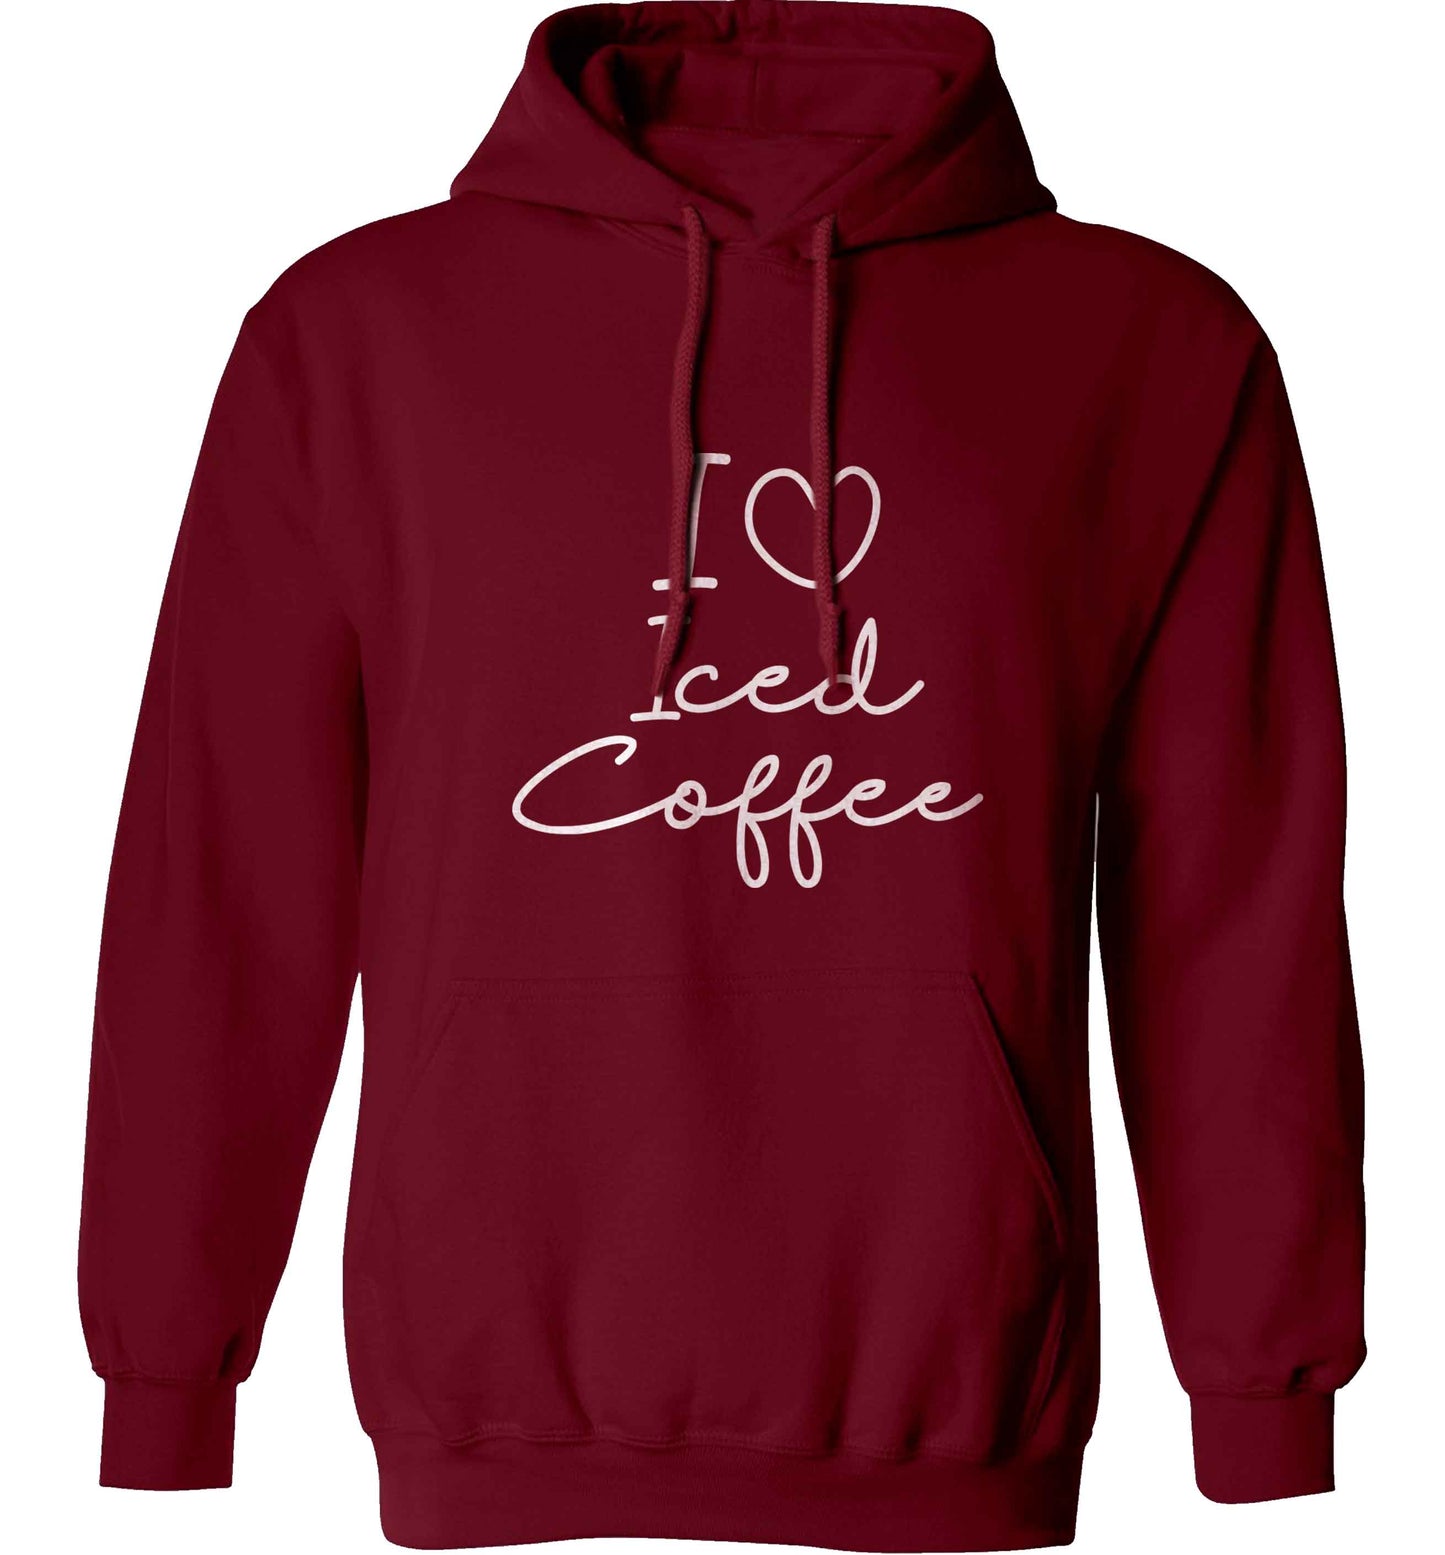 I love iced coffee adults unisex maroon hoodie 2XL